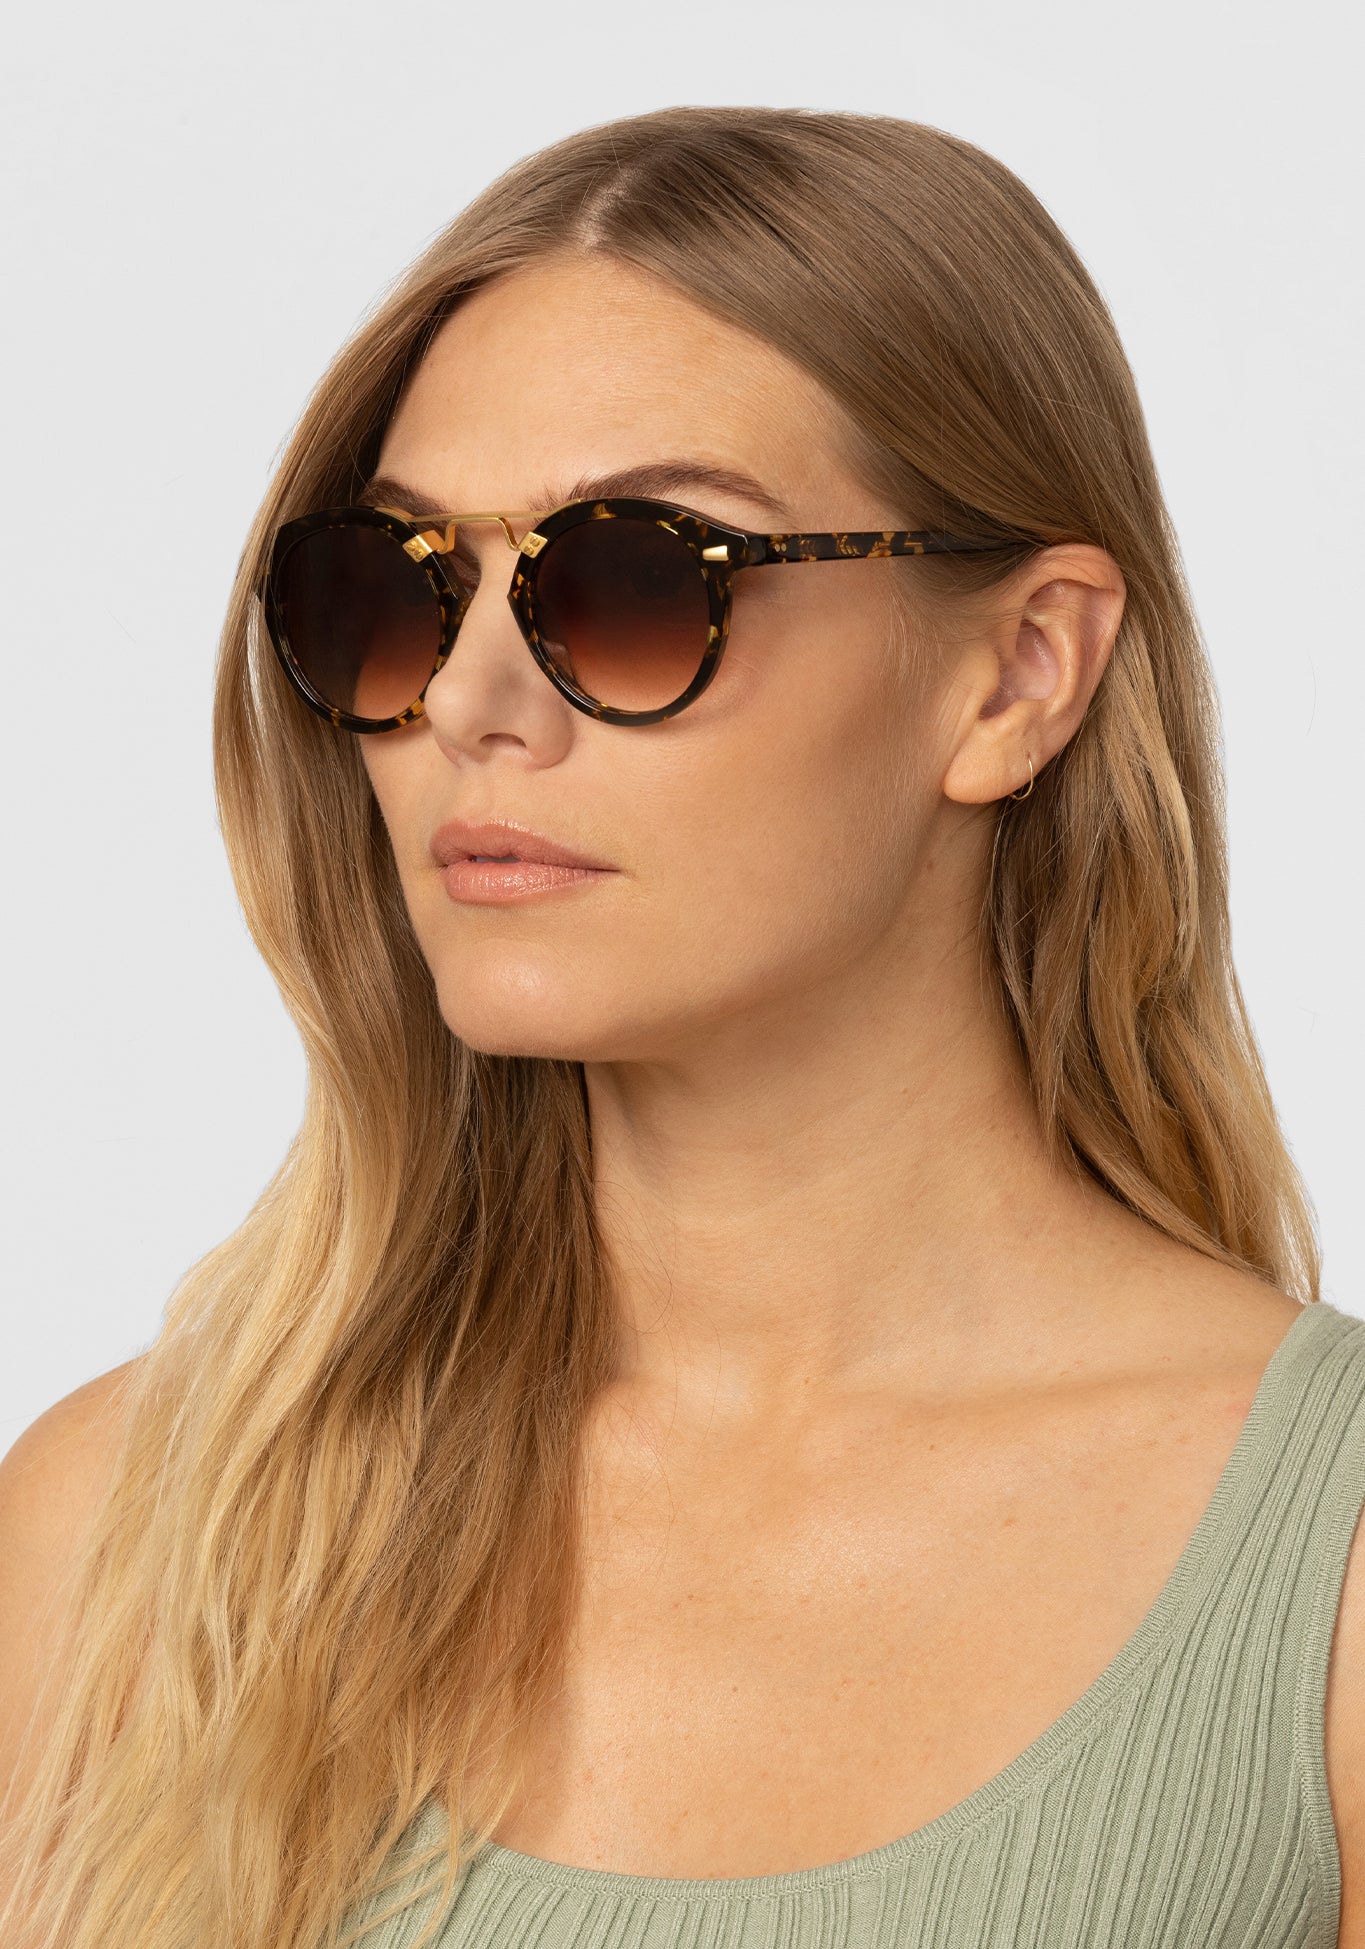 STL II | Zulu 24K - round Sunglasses handcrafted from Luxury tortoise acetate featuring 24K gold hardware womens model | Model: Maritza